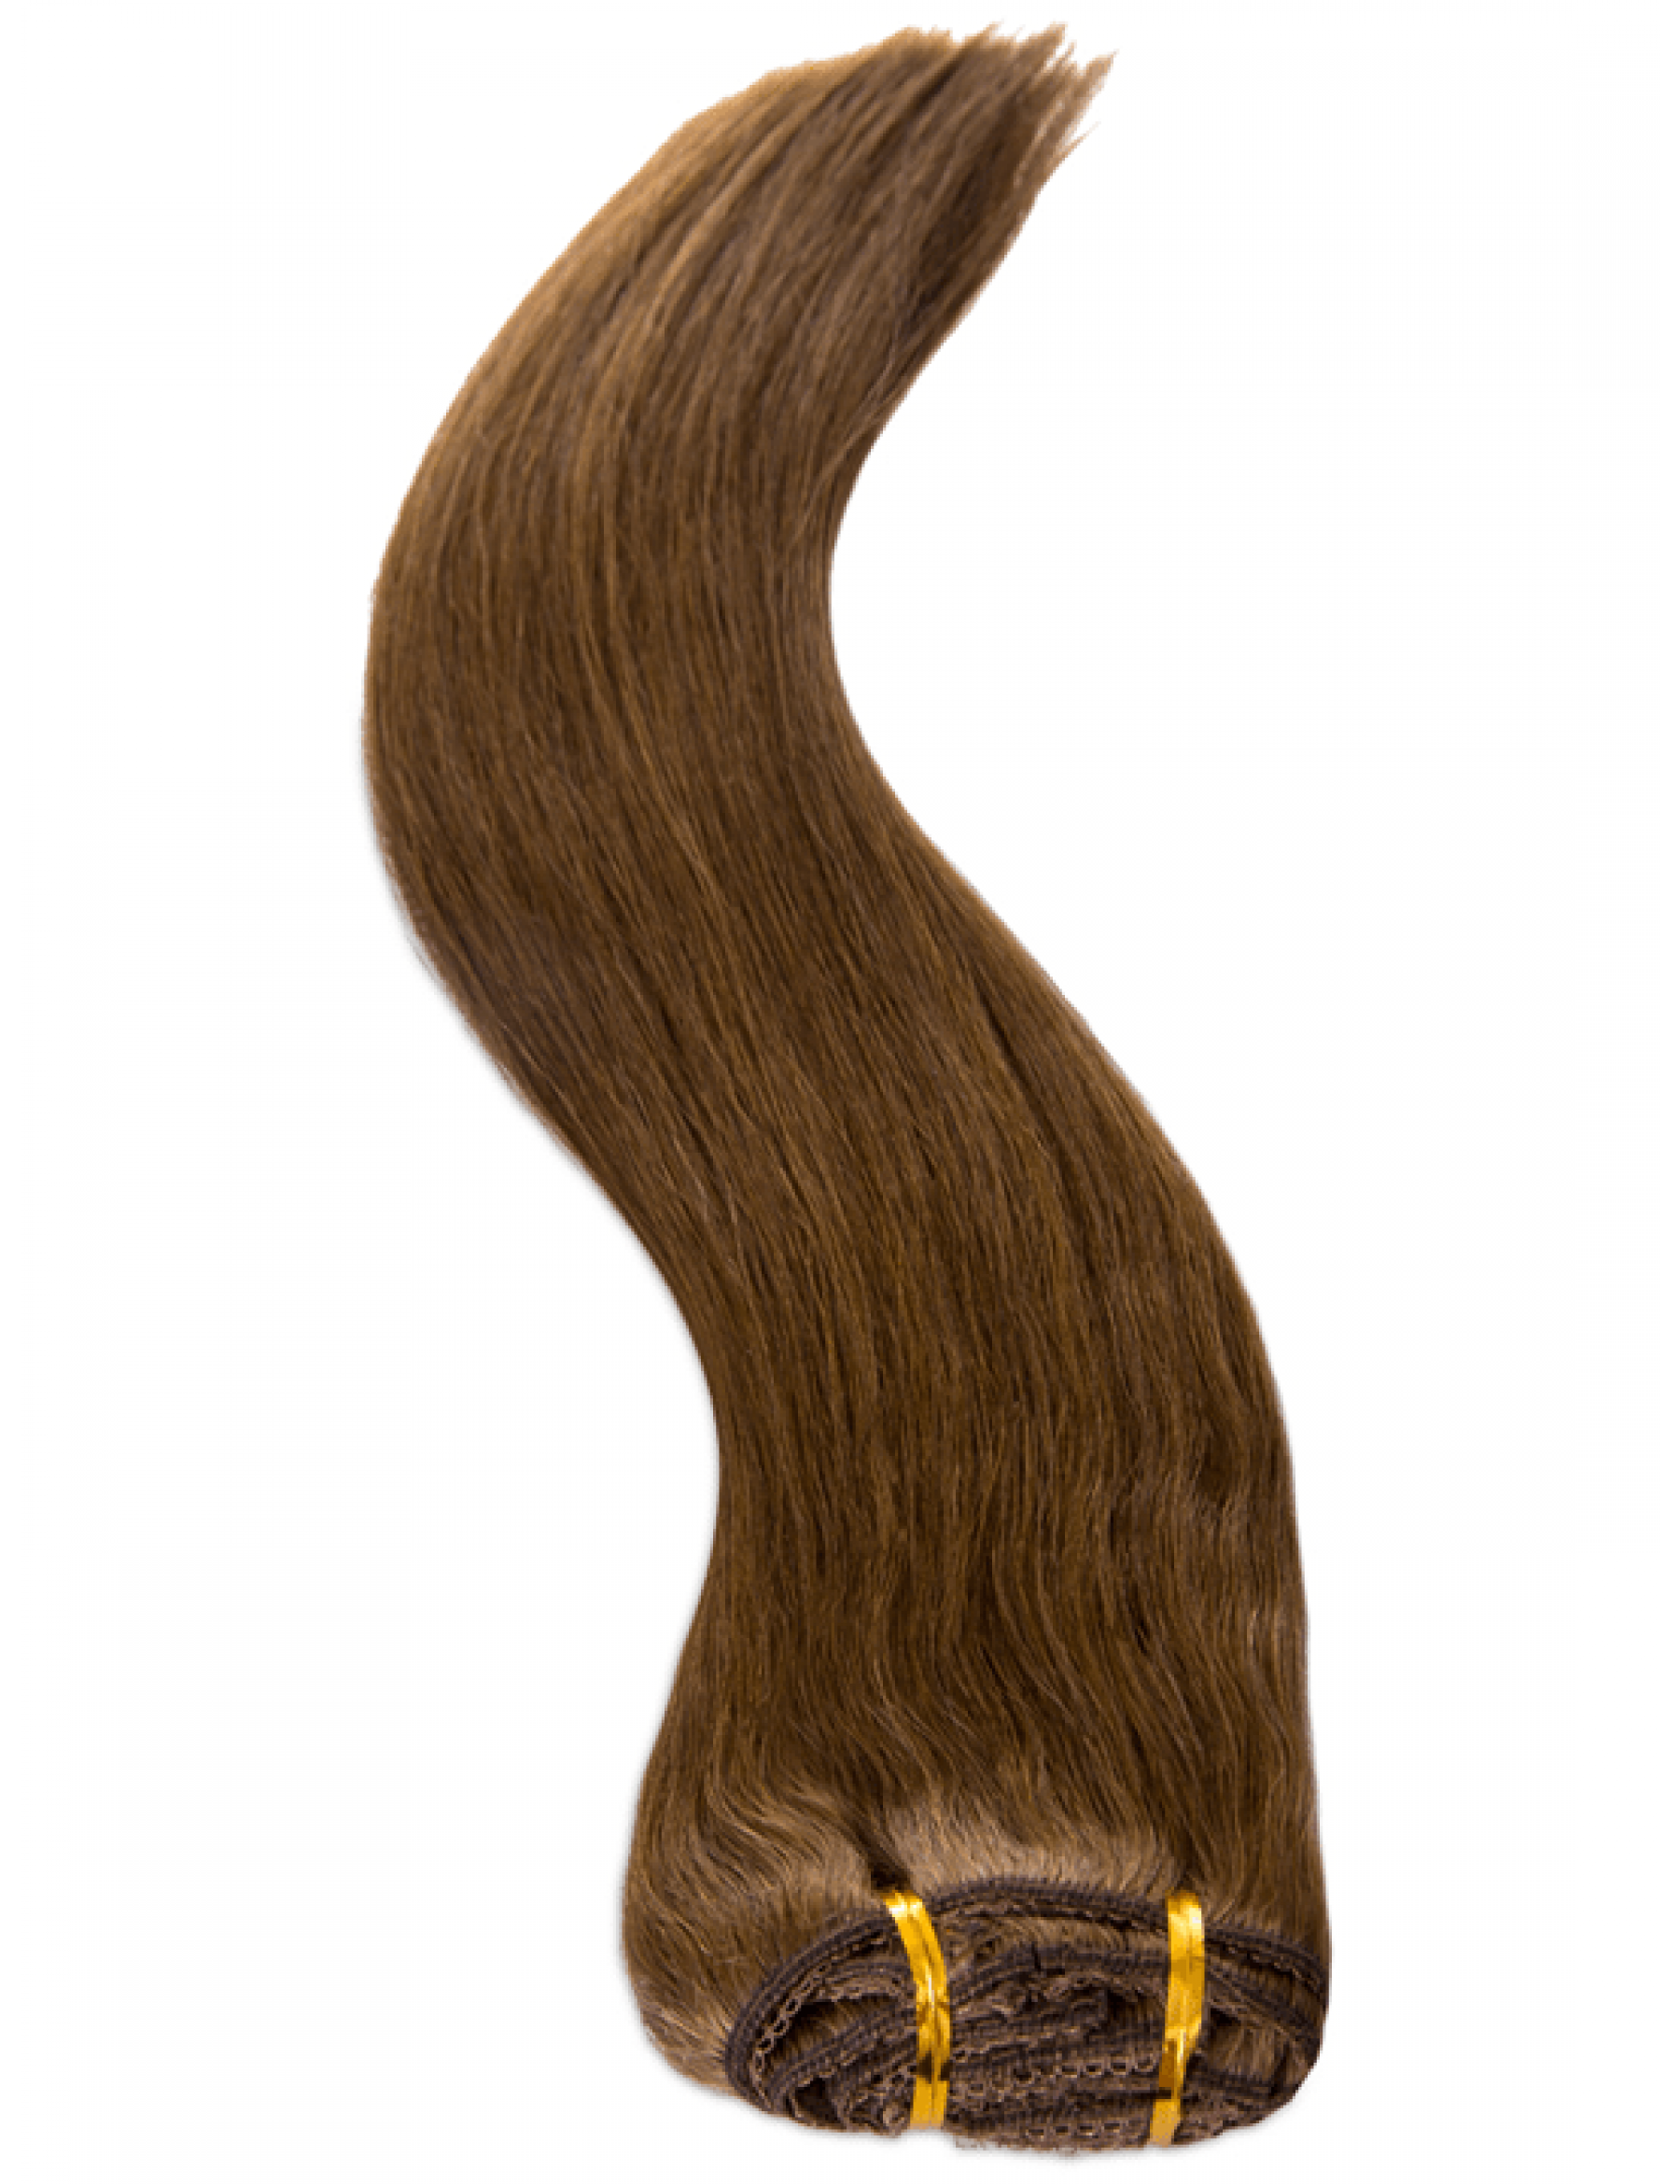 Chestnut Human hair